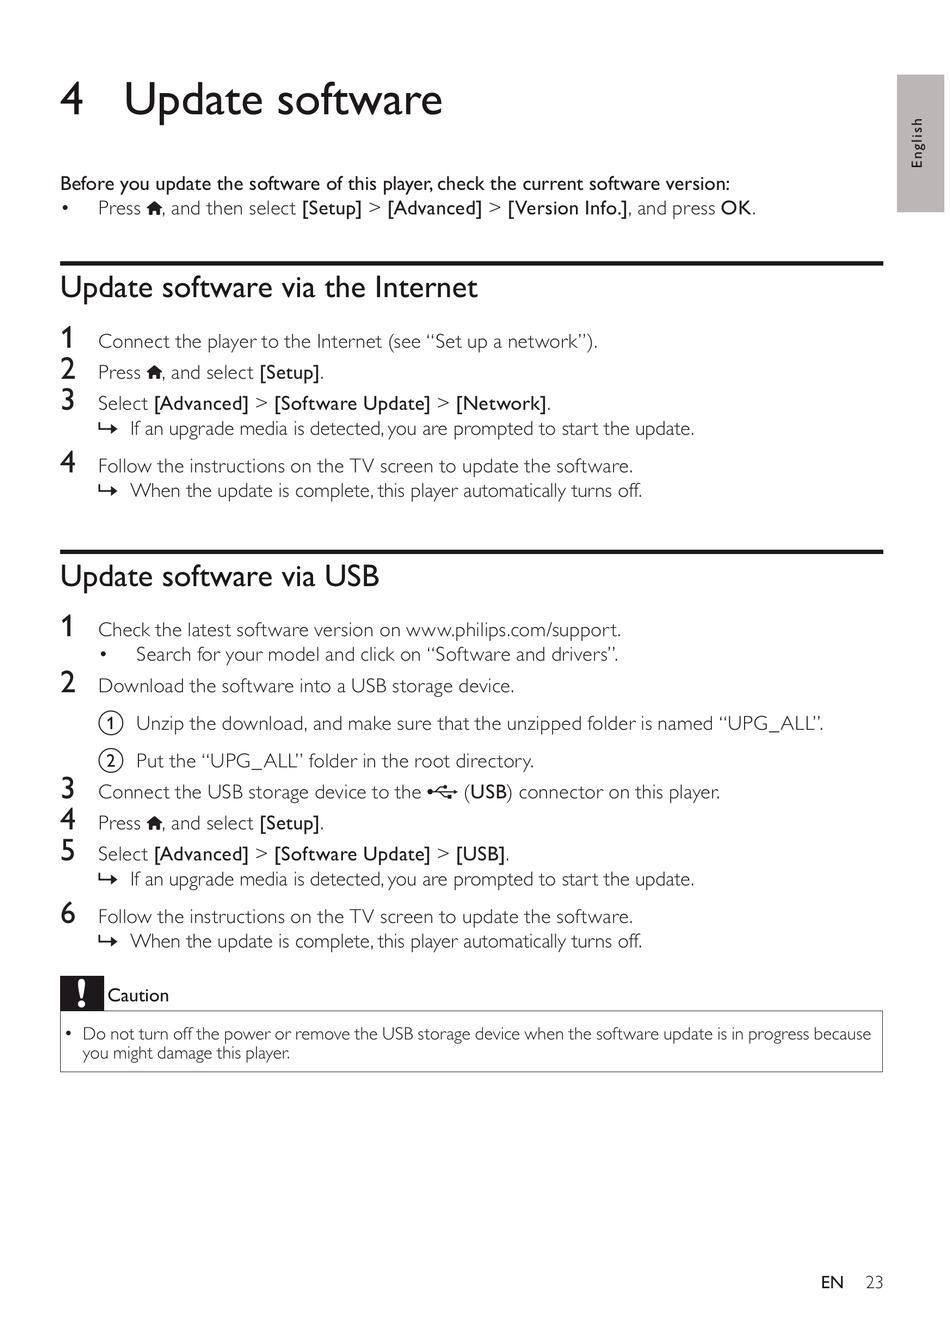 Update Software; Software Internet; Update Software Via Usb - Philips BDP7600/05 User Manual [Page 23] | ManualsLib